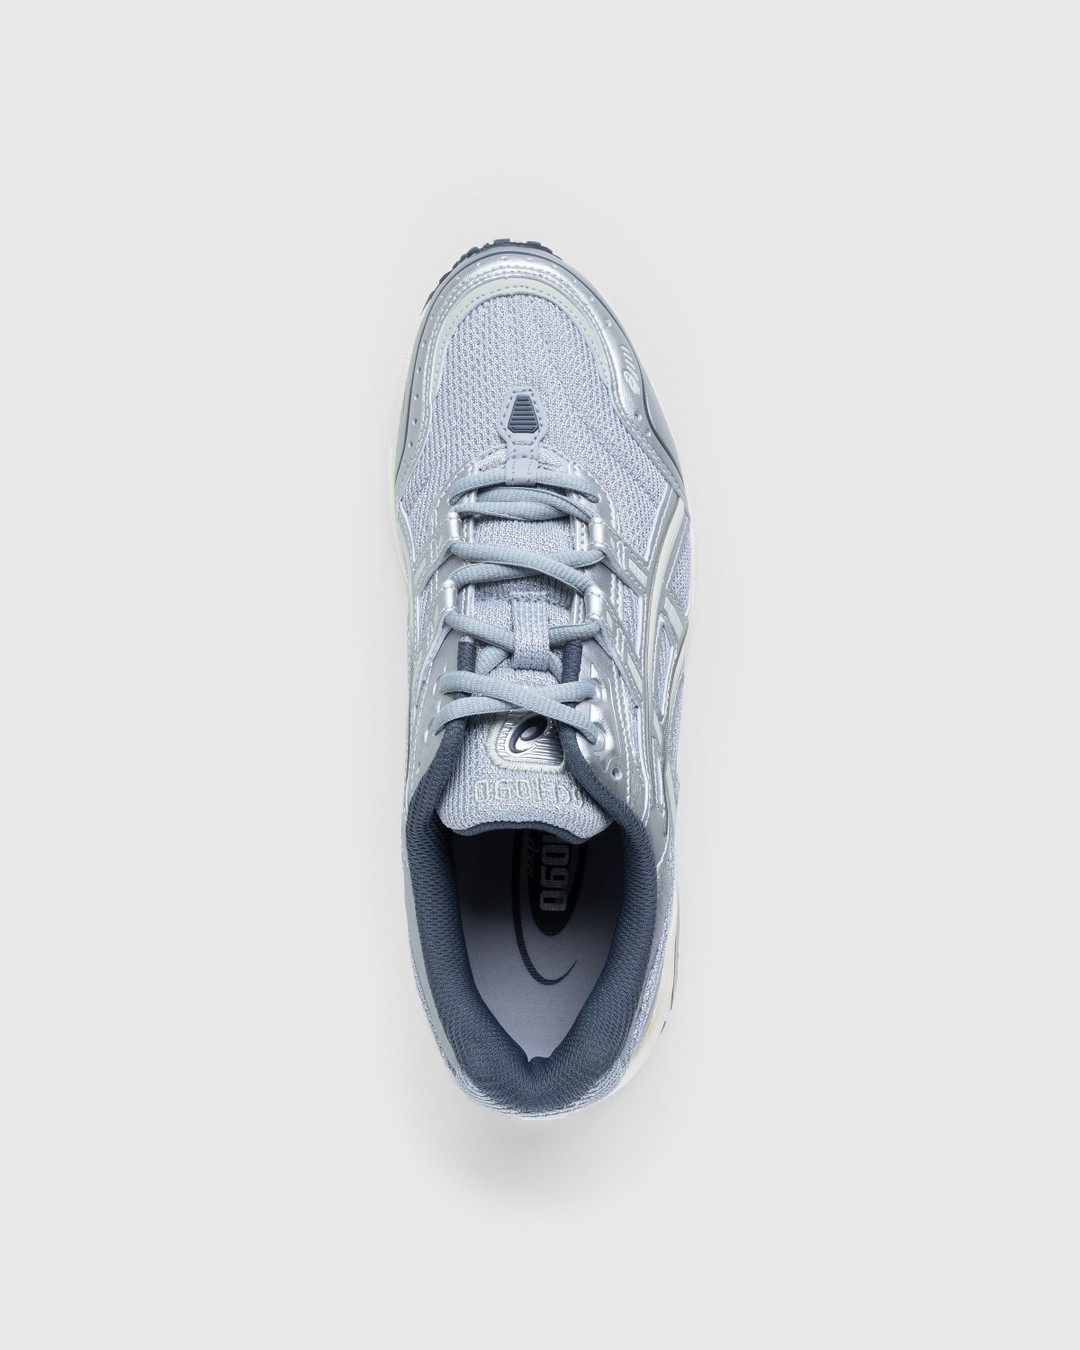 asics – GEL-1090 Piedmont Gray/Tarmac - Sneakers - Silver - Image 5